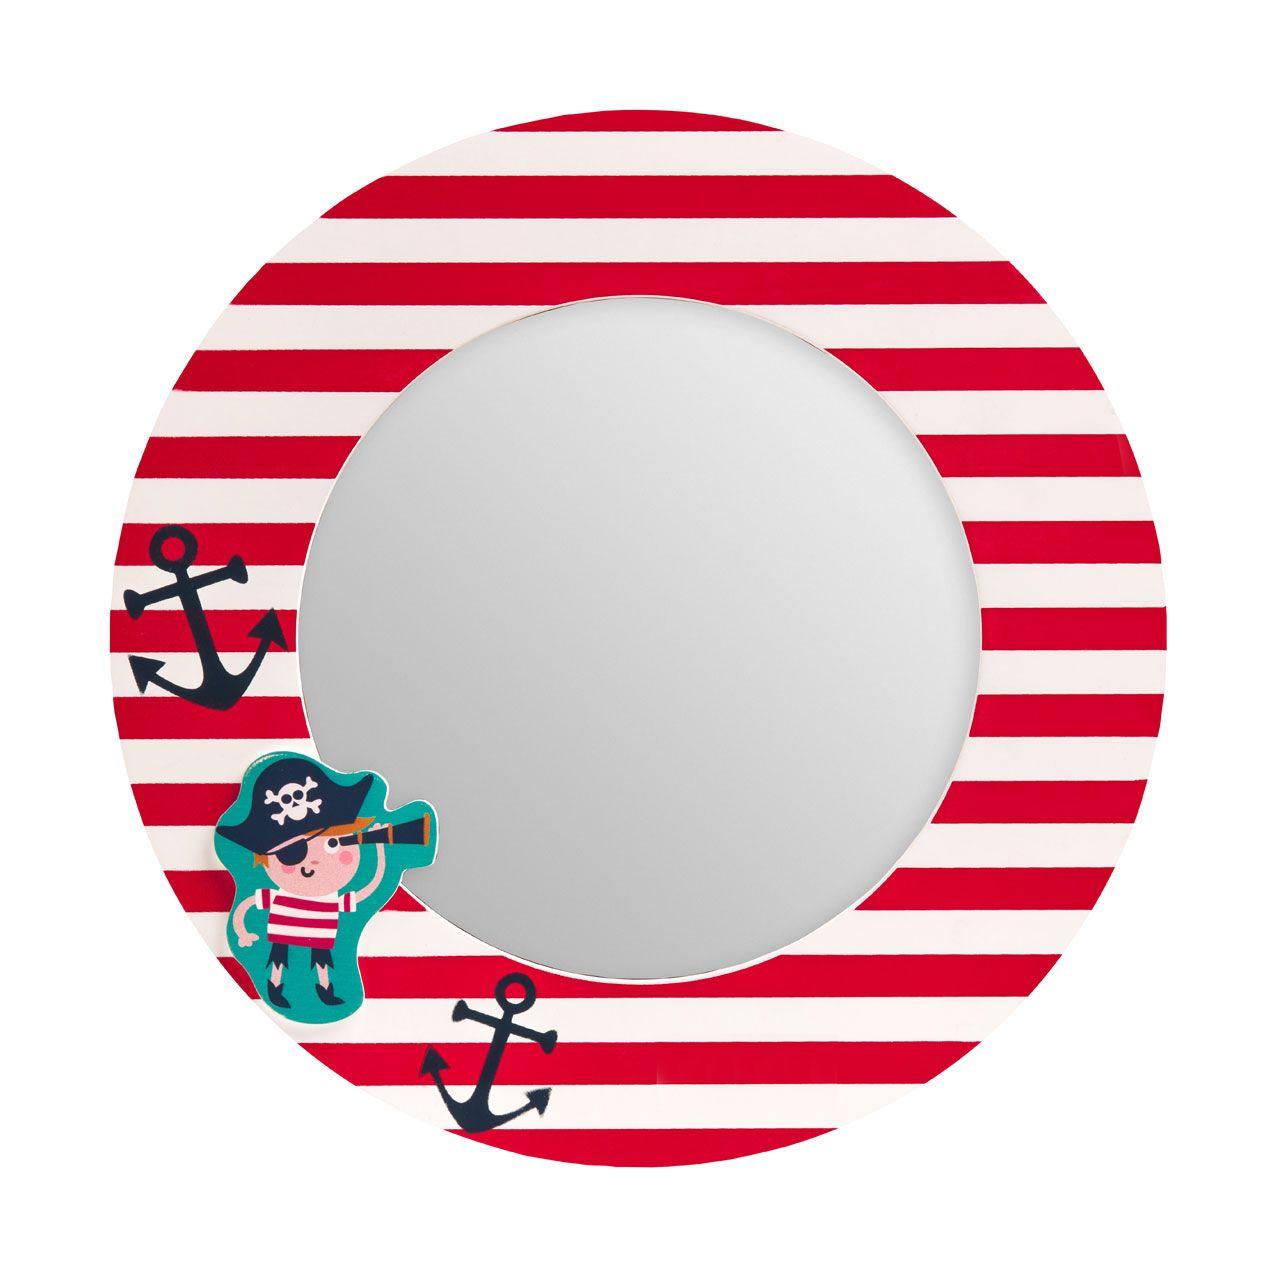 Red and White Round Logo - Premier Pirate Kids Wall Mirror, Red & White Round 30 x 1 x 30cm ...